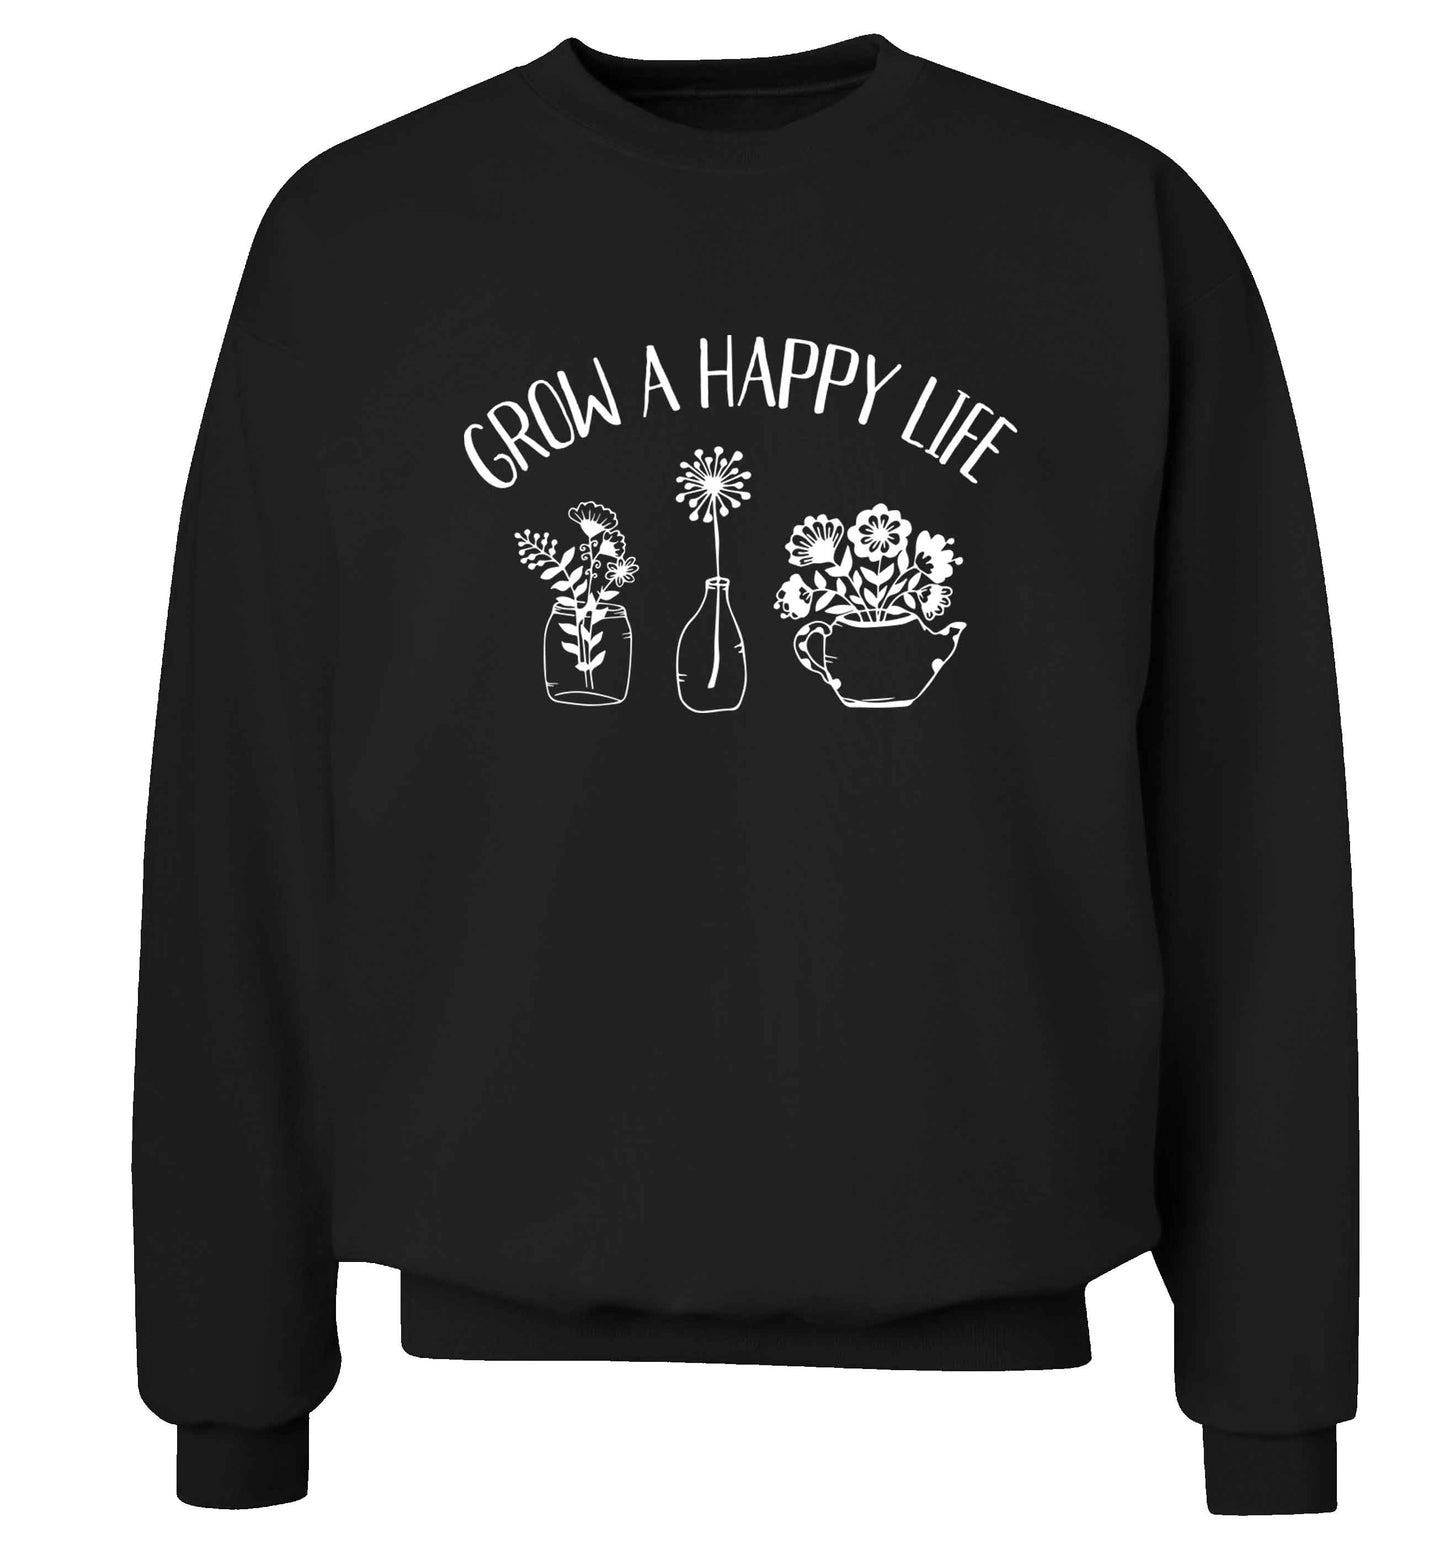 Grow a happy life Adult's unisex black Sweater 2XL